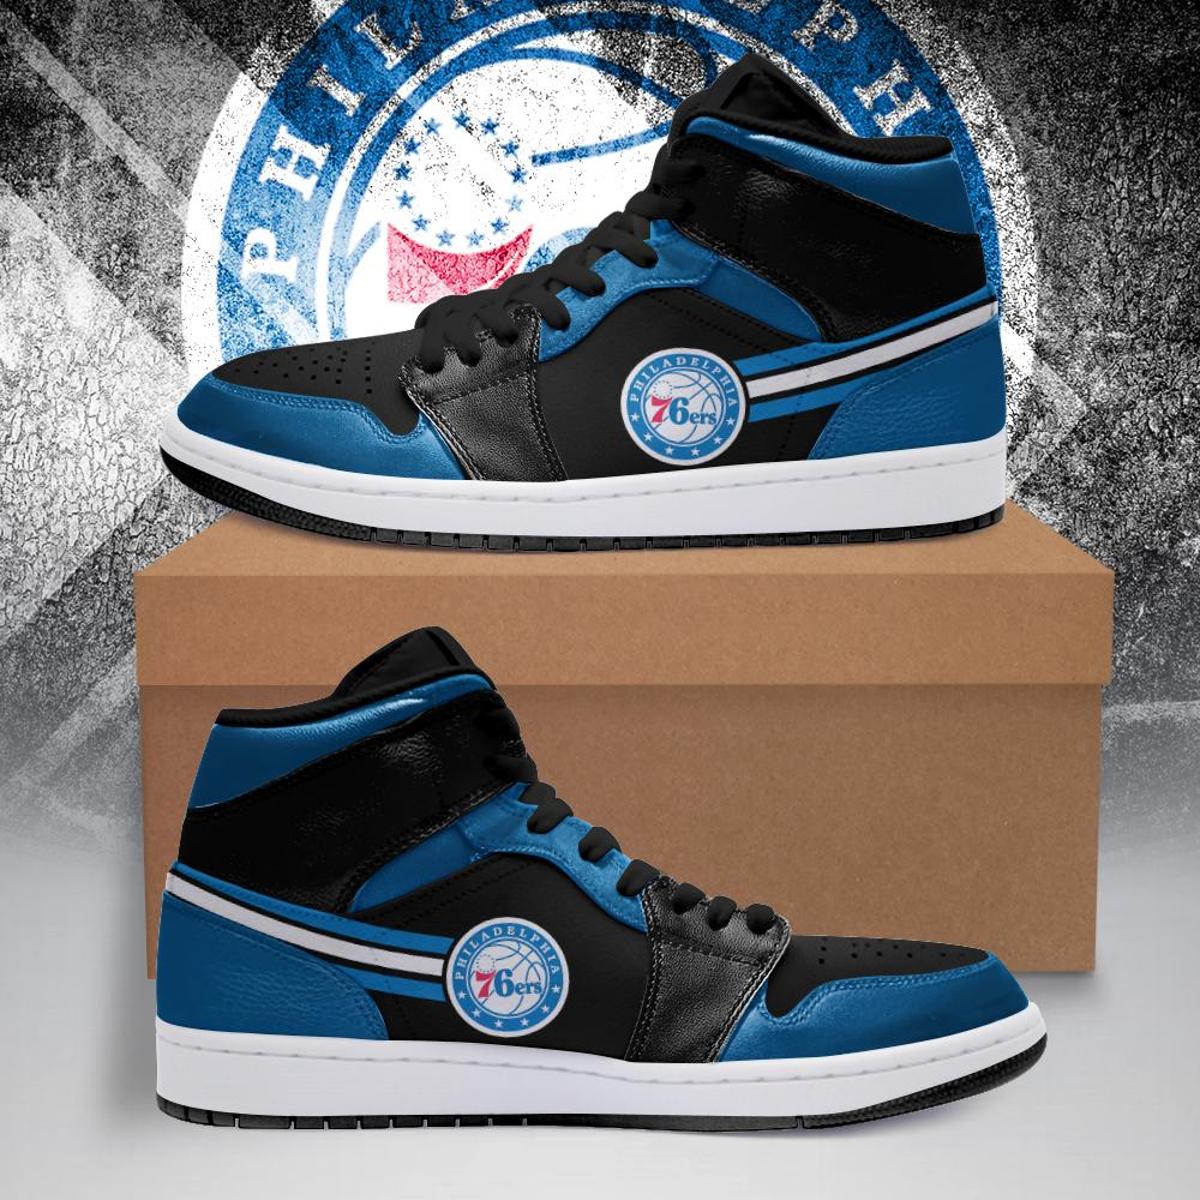 Memphis Grizzlies Navy Blue Black Air Jordan 1 High Sneakers For Fans